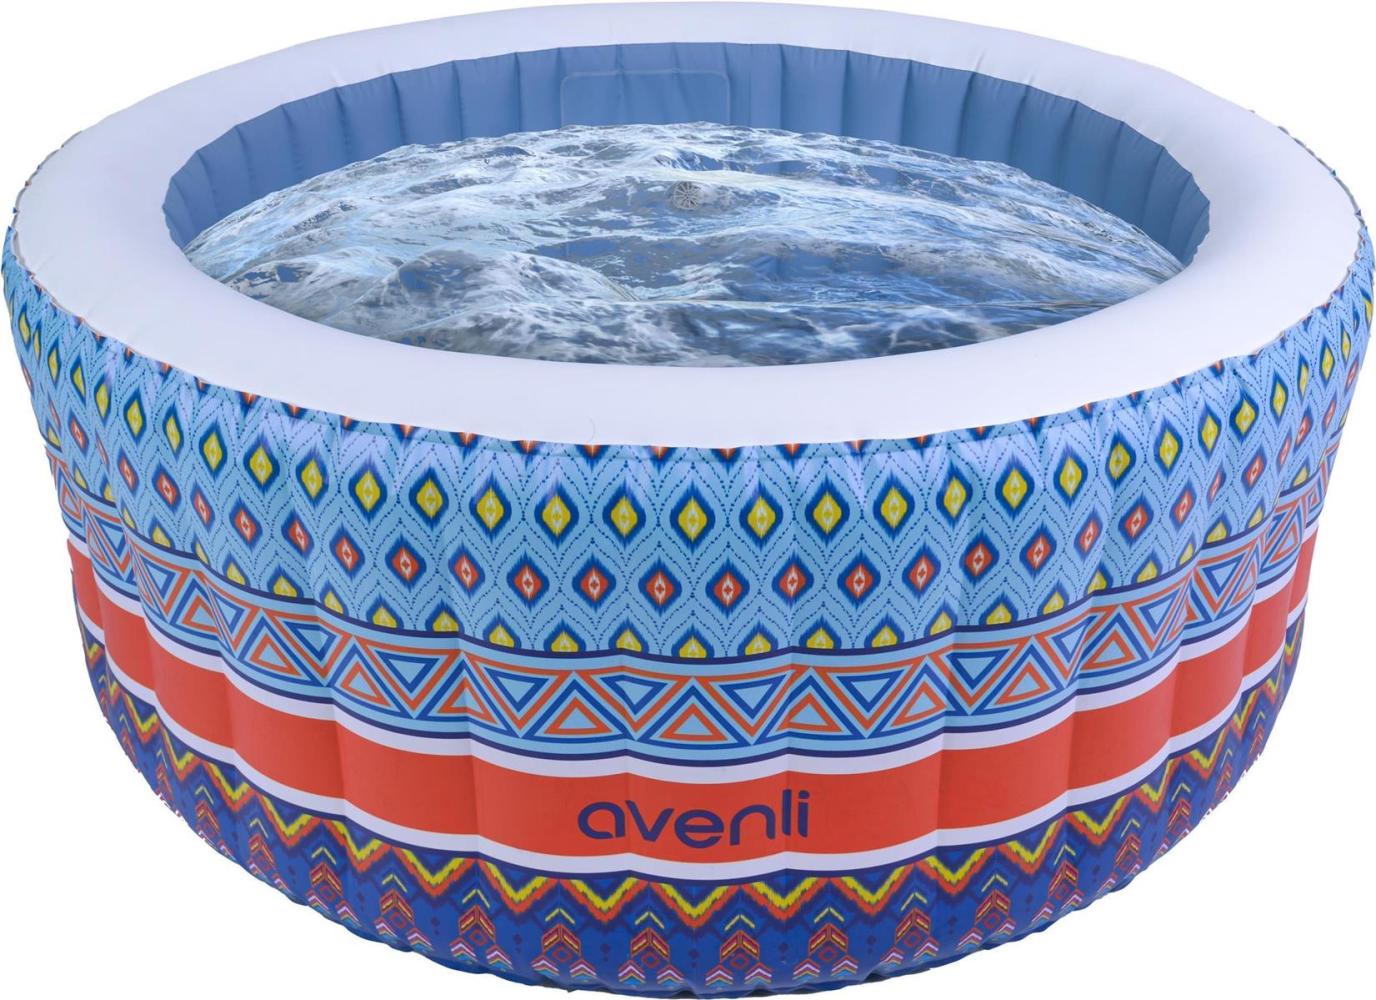 Avenli Selection Fiji Spa 175 x 70 cm aufblasbarer Outdoor Whirlpool Bild 1